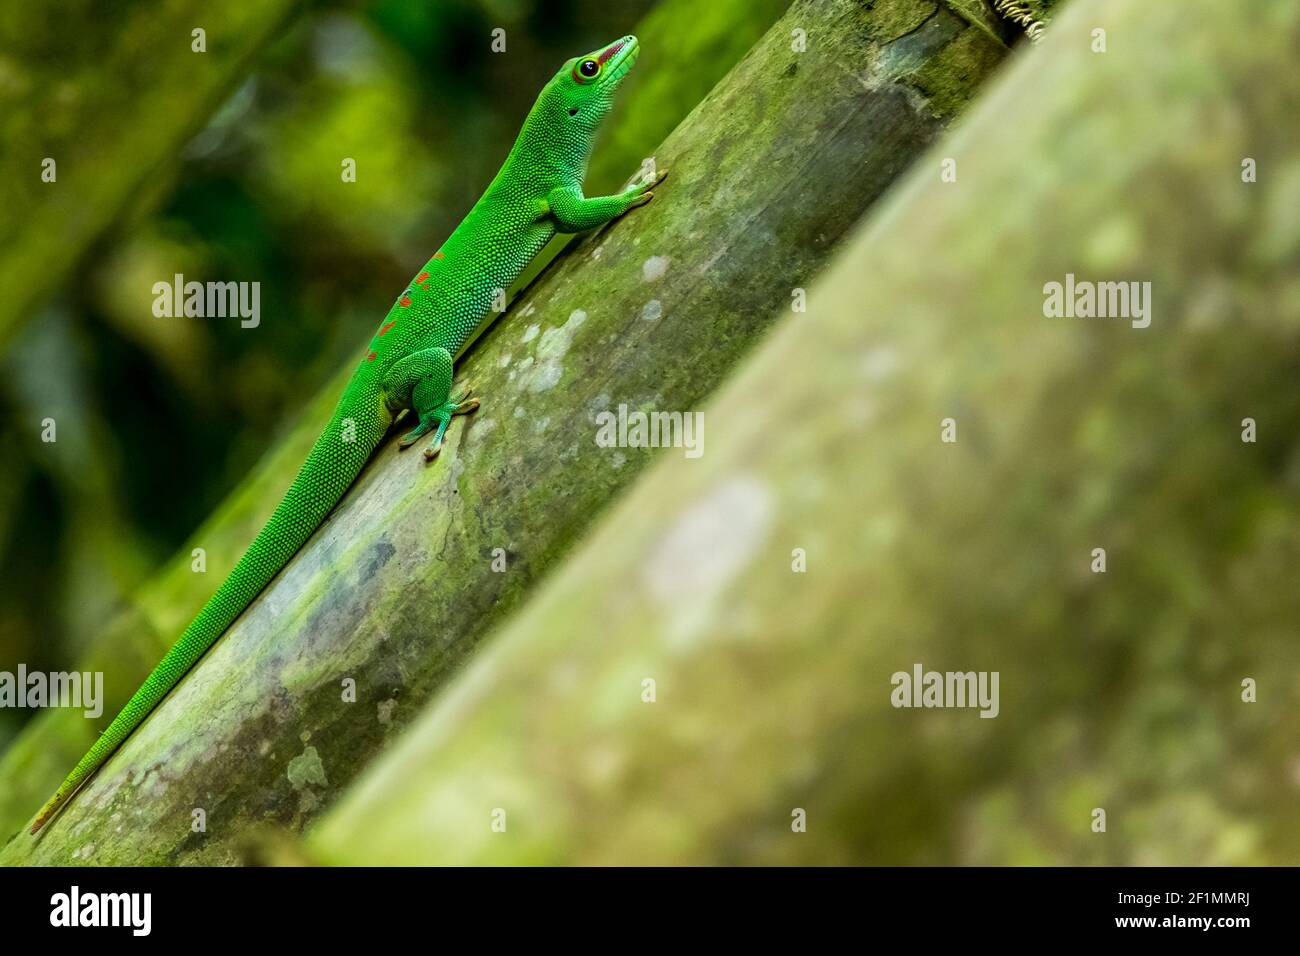 Madagascar Taggecko Foto de stock